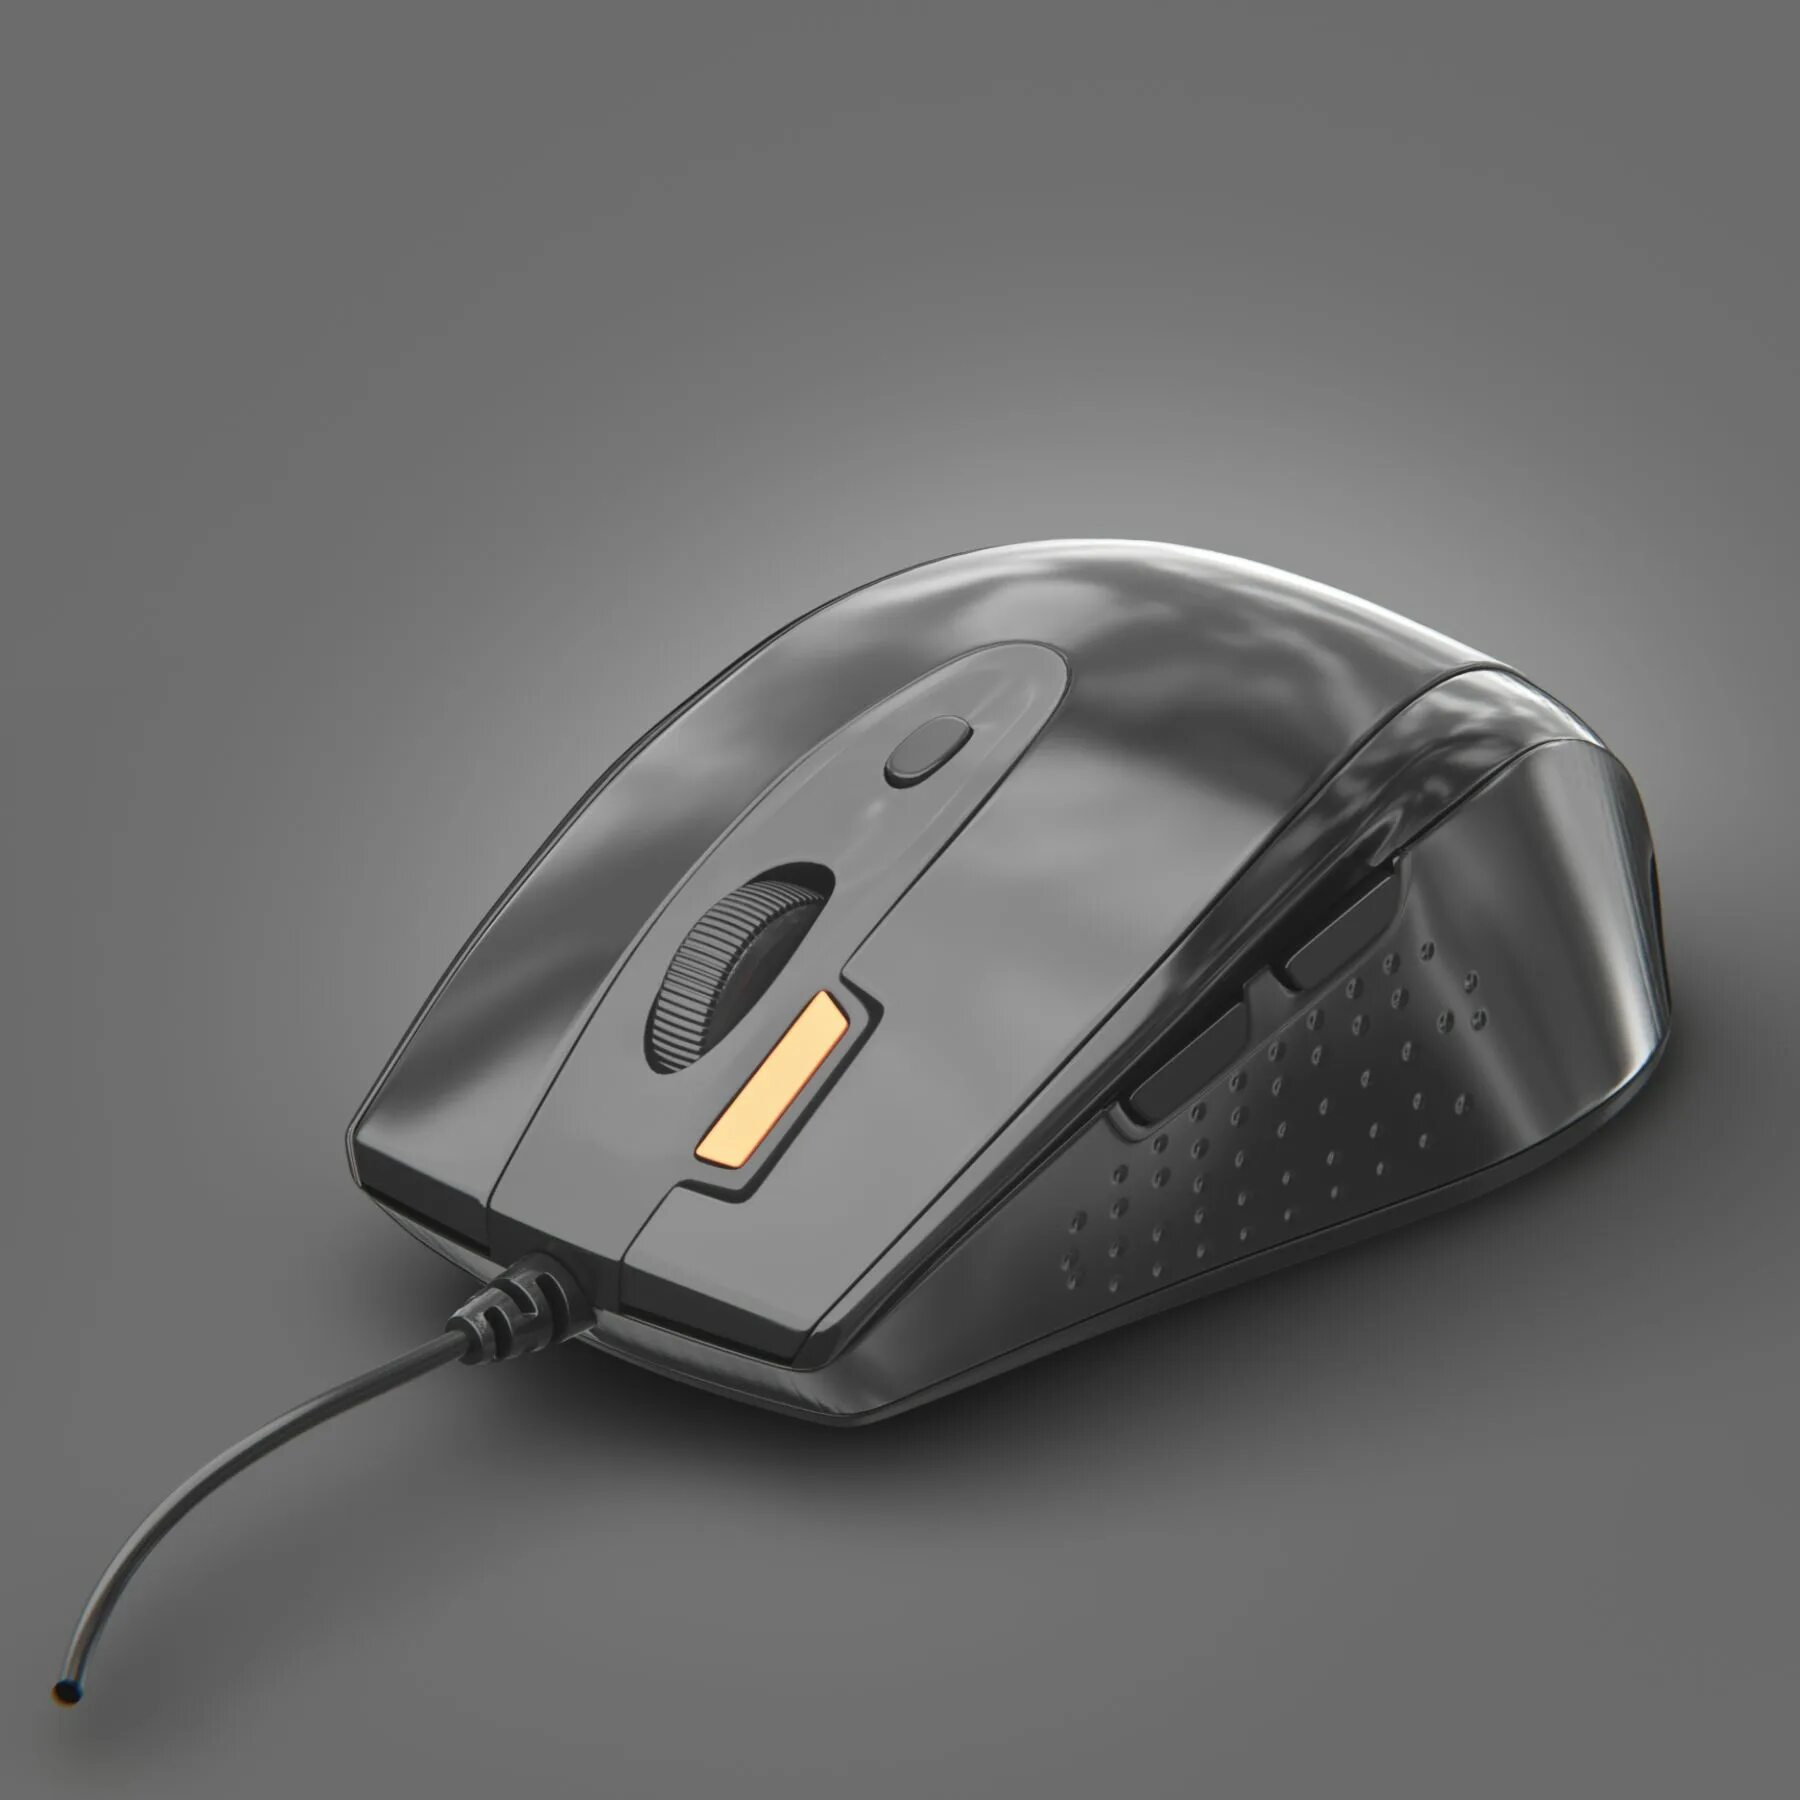 Компьютерная мышь 3ds Max. Мышь компьютерная модель Mice v9. Мышь для 3ds Max. Mouse Computer x6 70d.